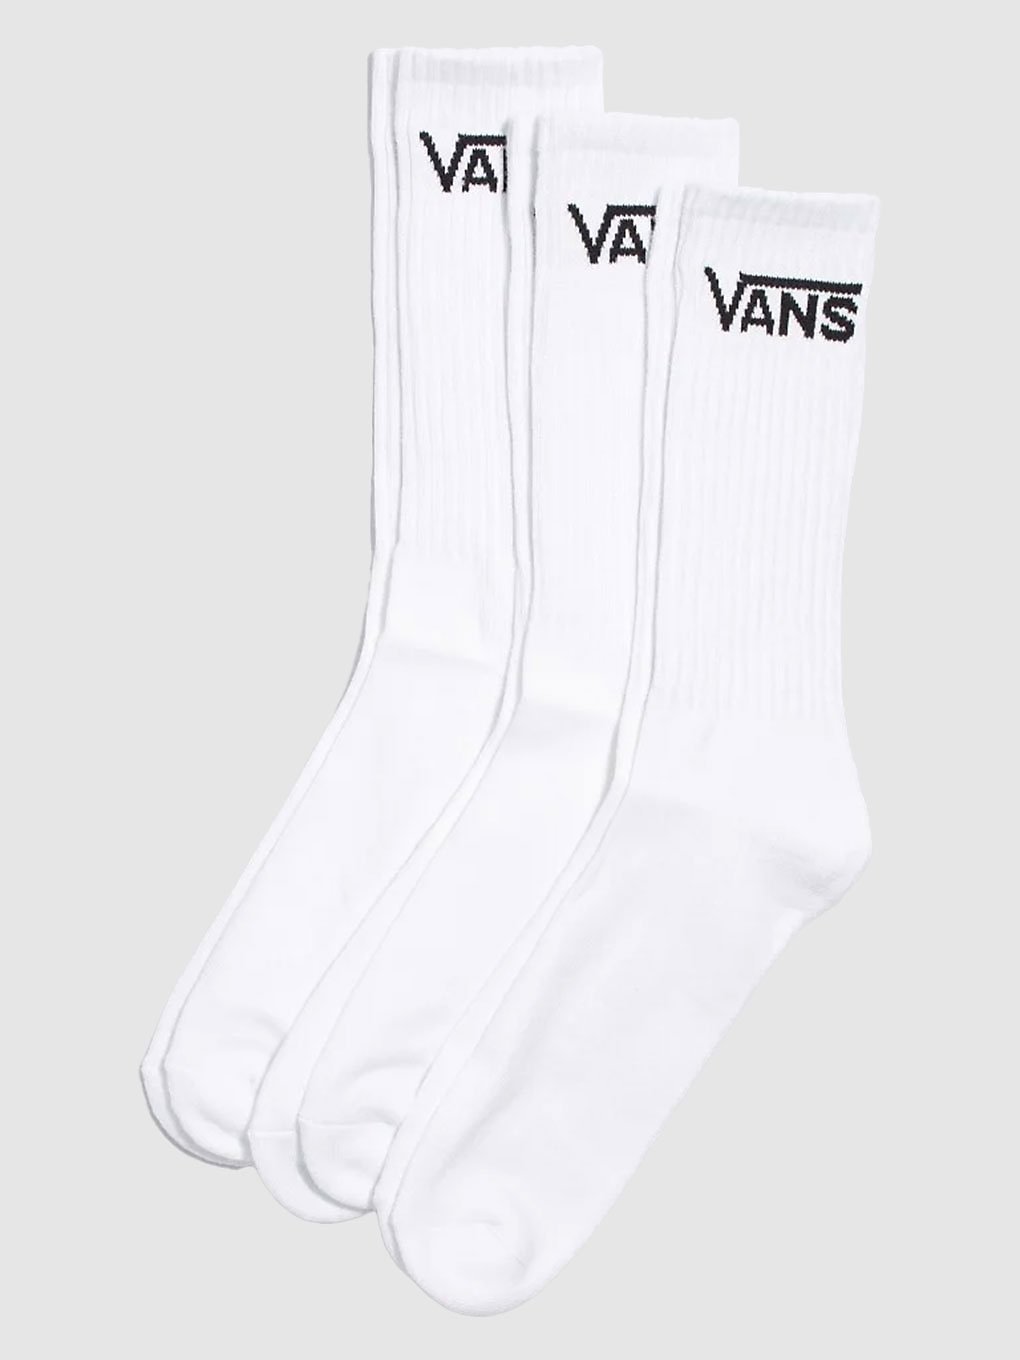 Vans Classic Crew 9.5-13 Socks rox white